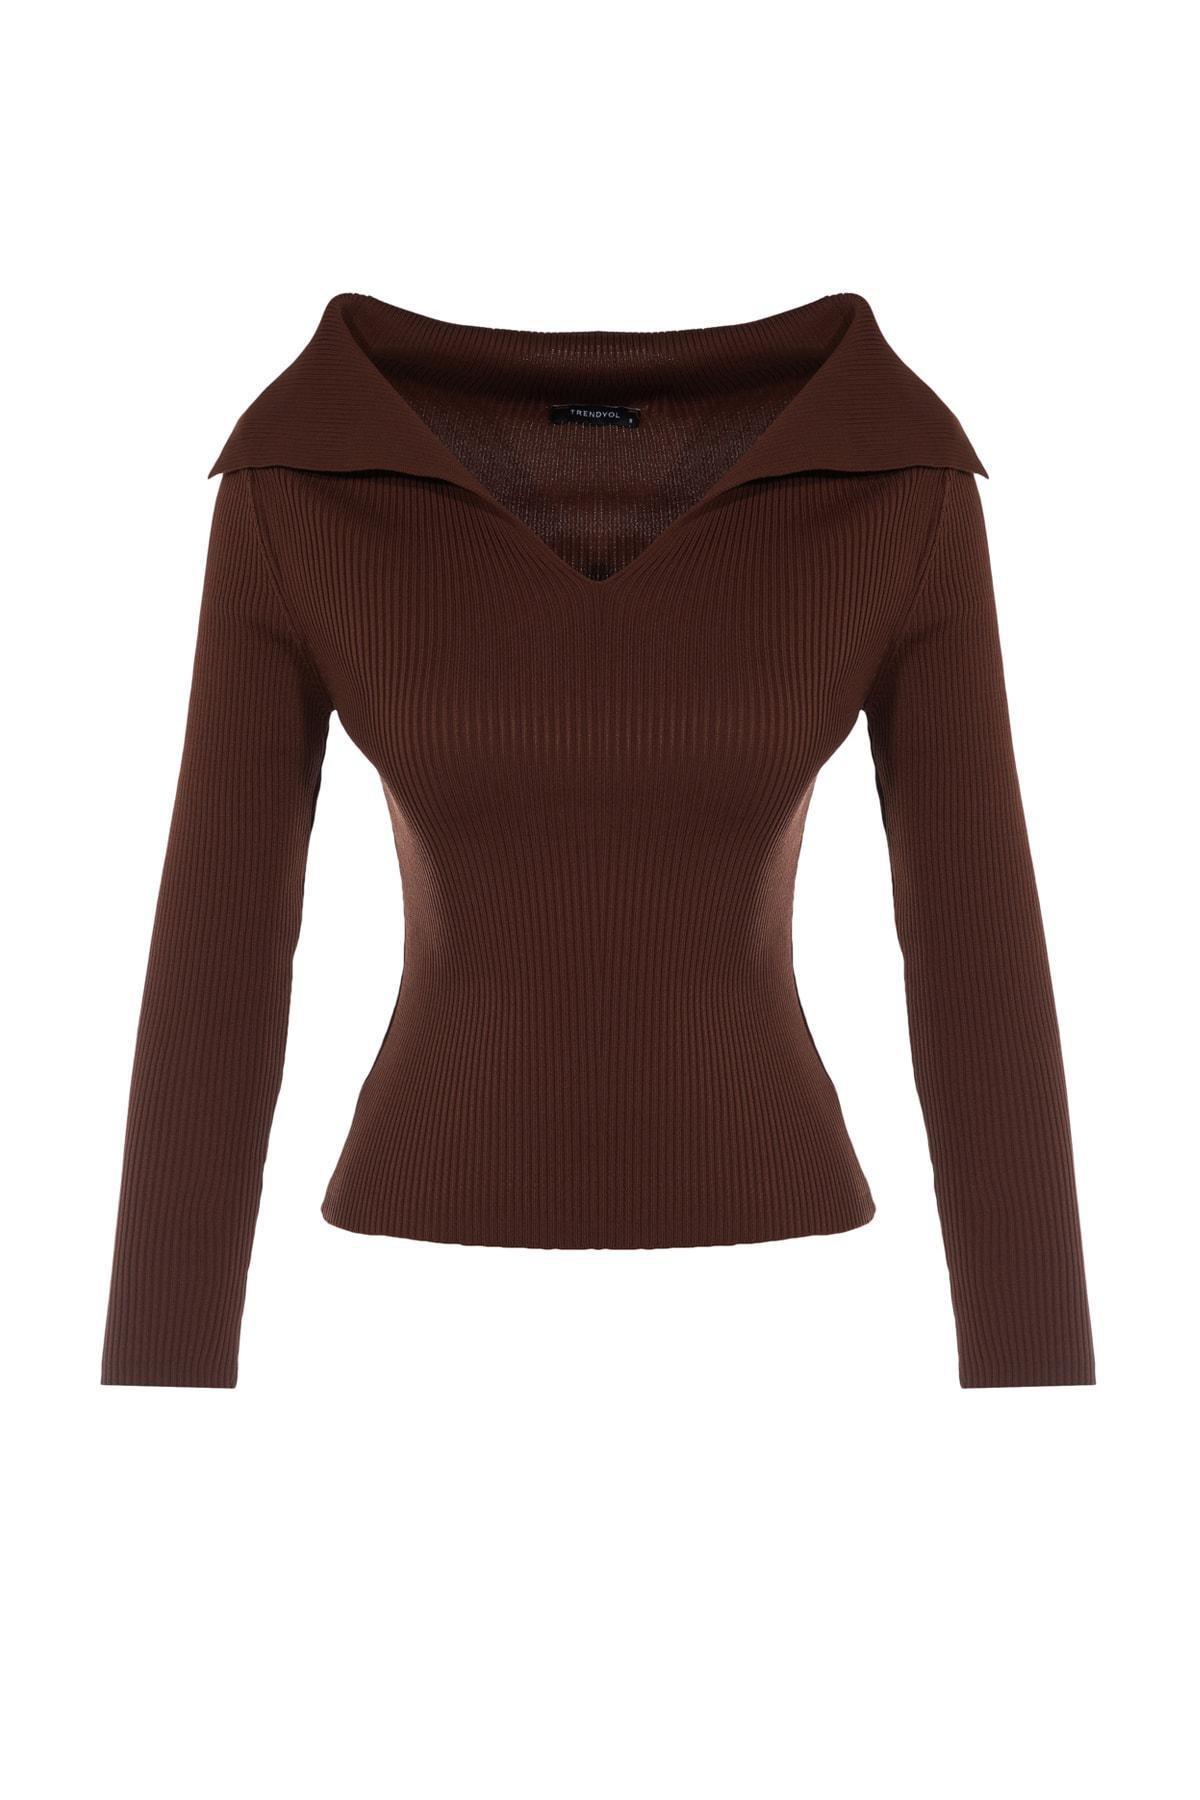 Trendyol - Brown Plain Sweater